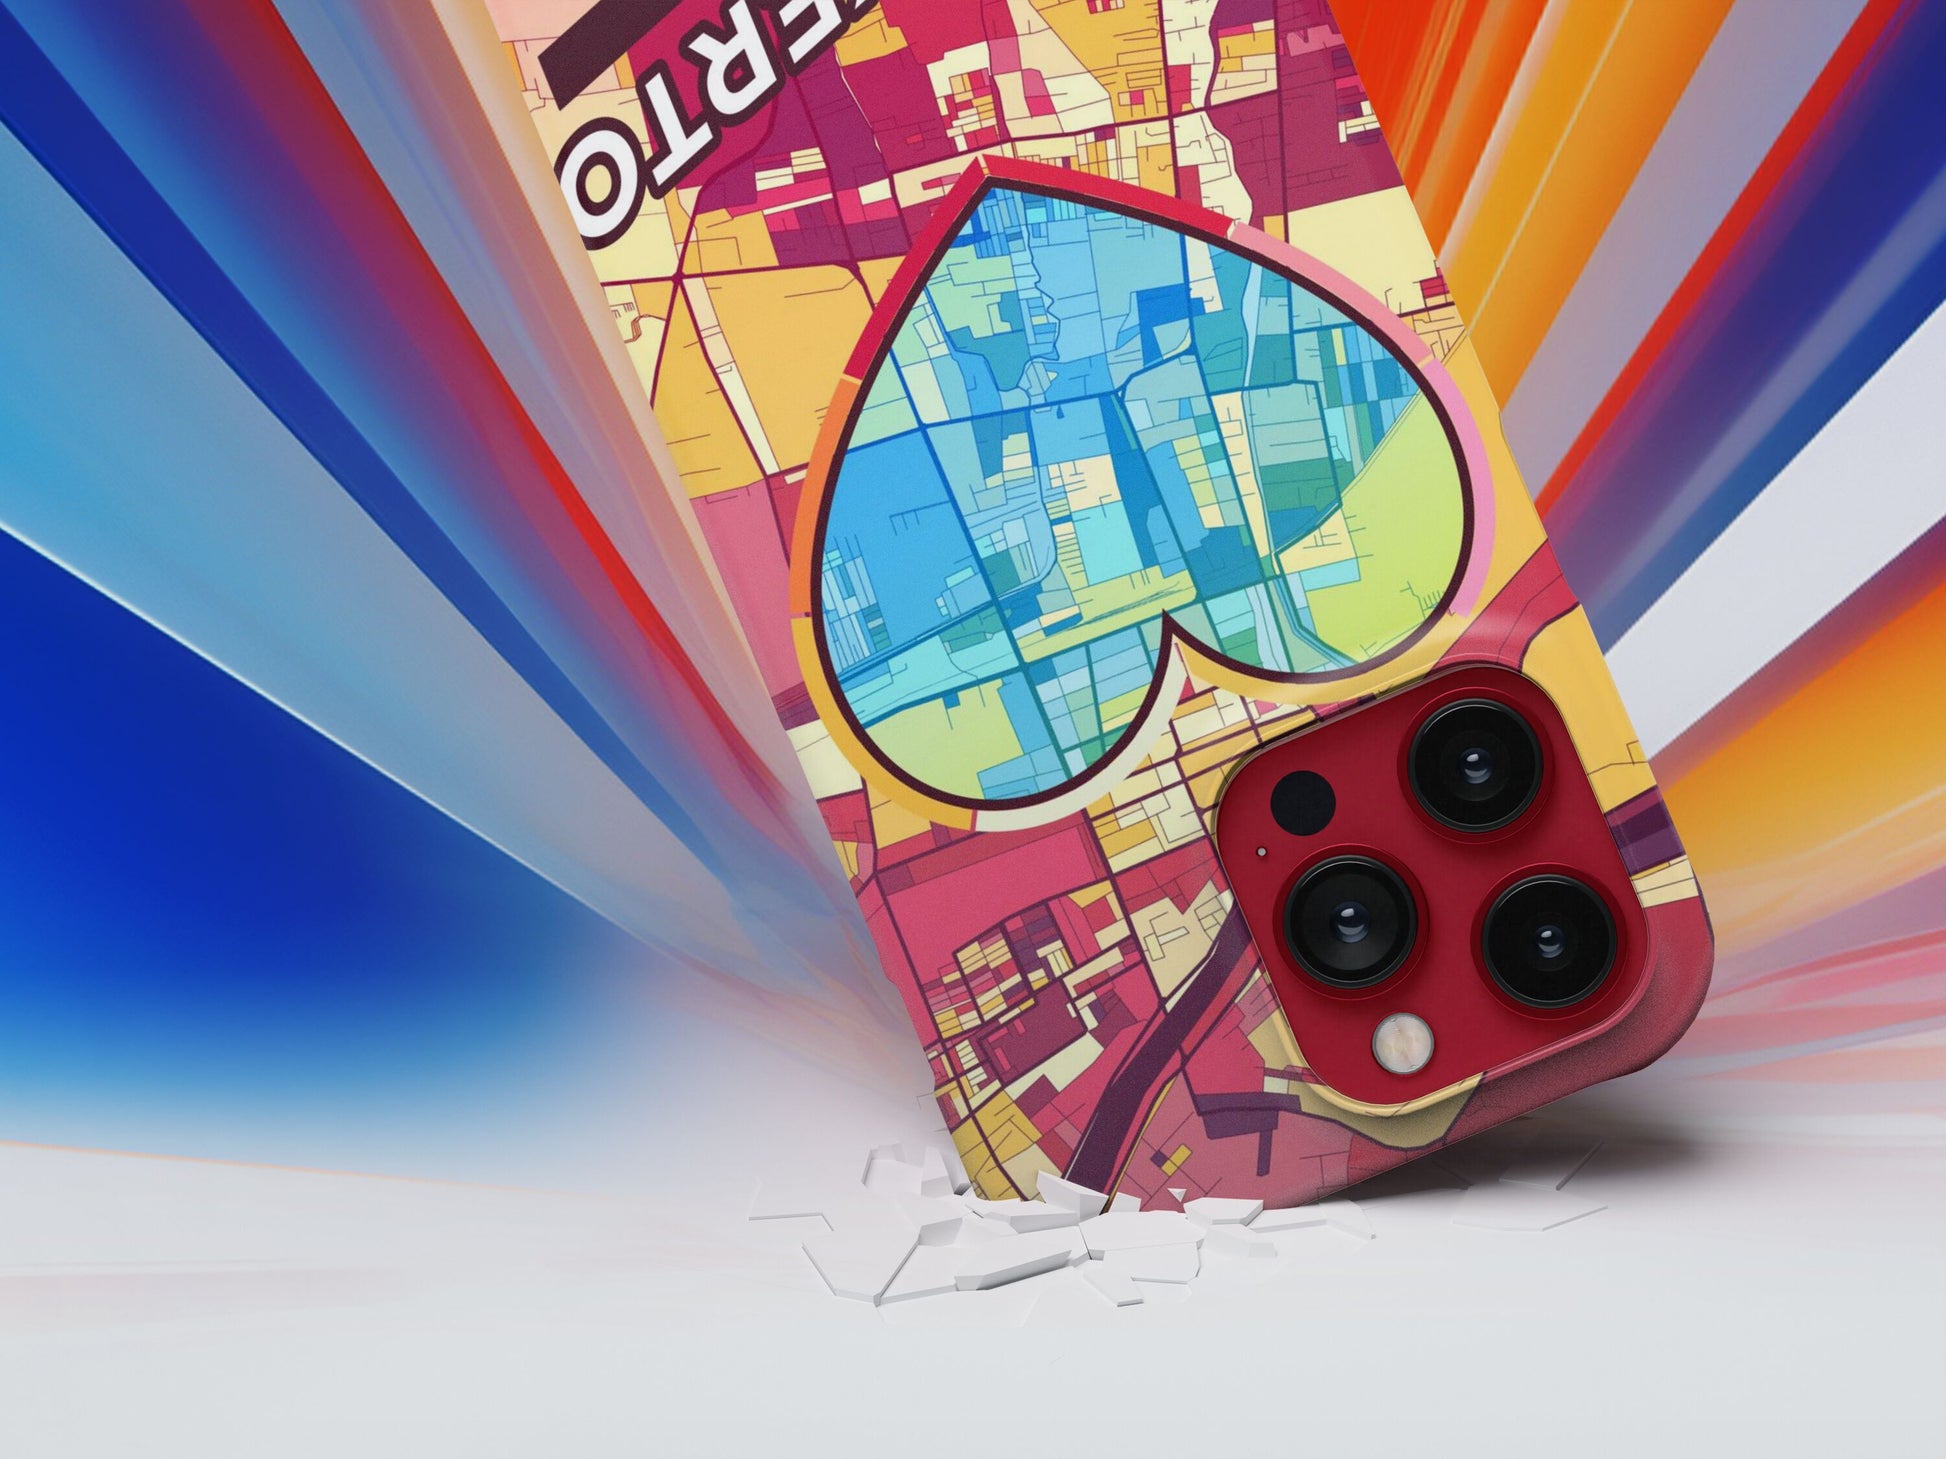 Mojokerto Indonesia slim phone case with colorful icon